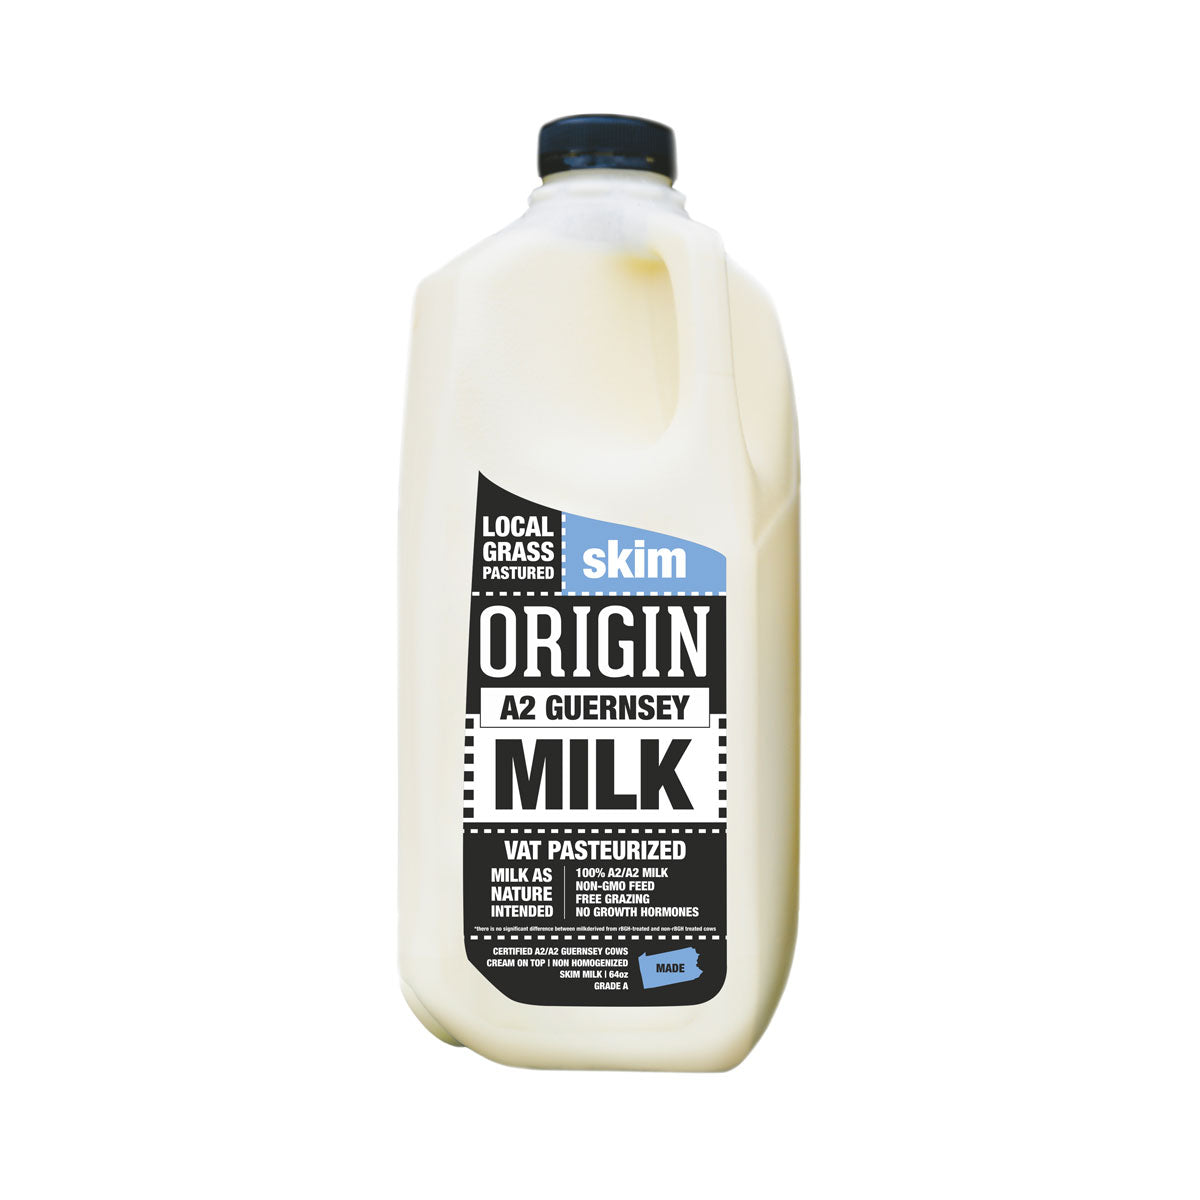 Origin Milk Skim Milk 1/2 GAL